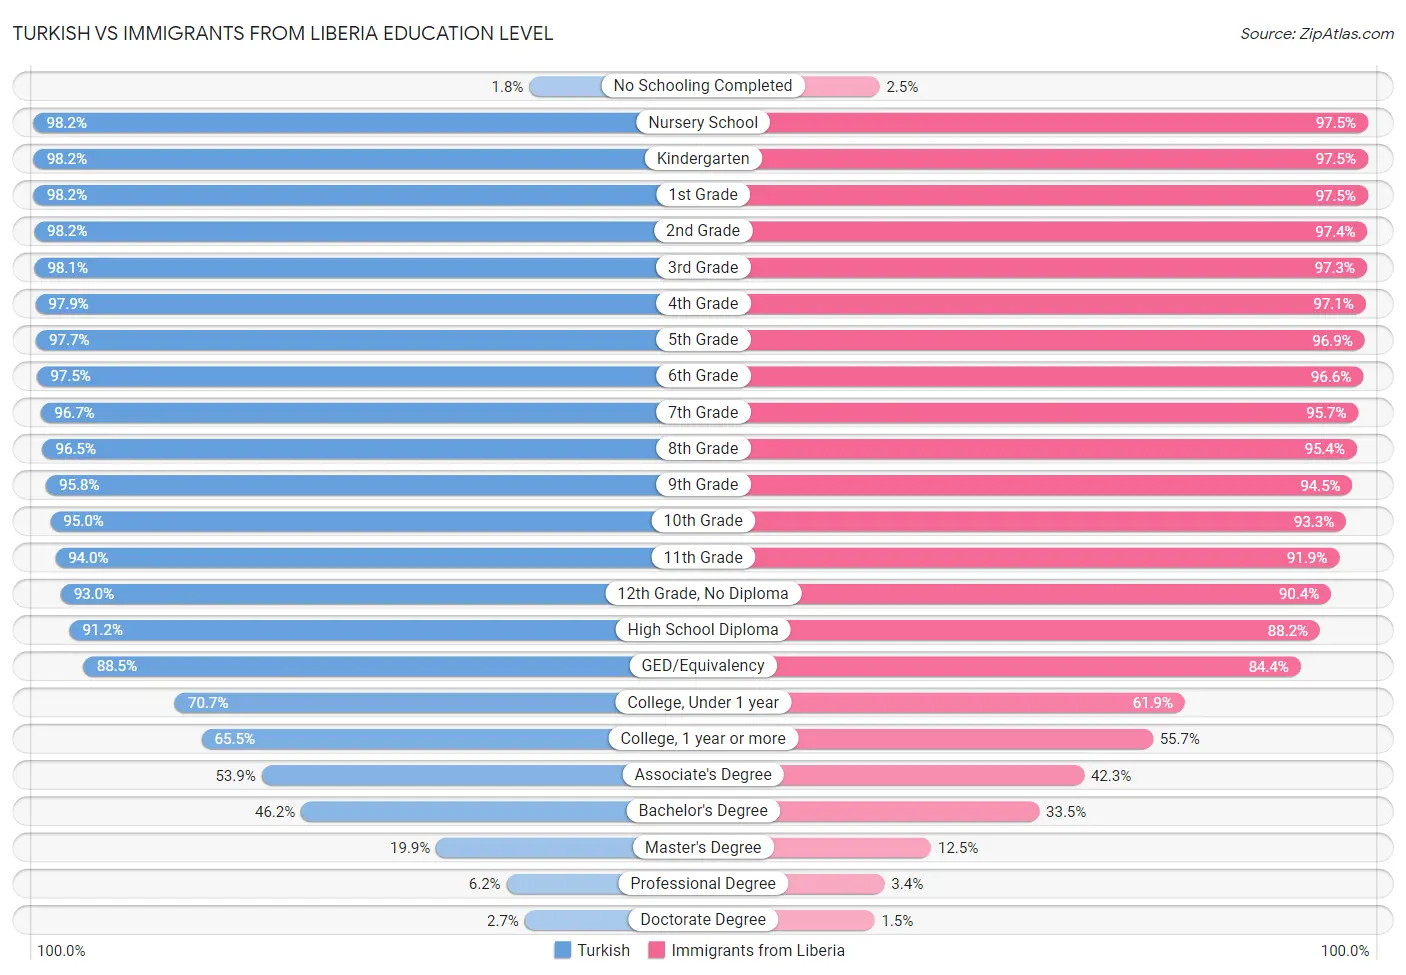 Turkish vs Immigrants from Liberia Education Level